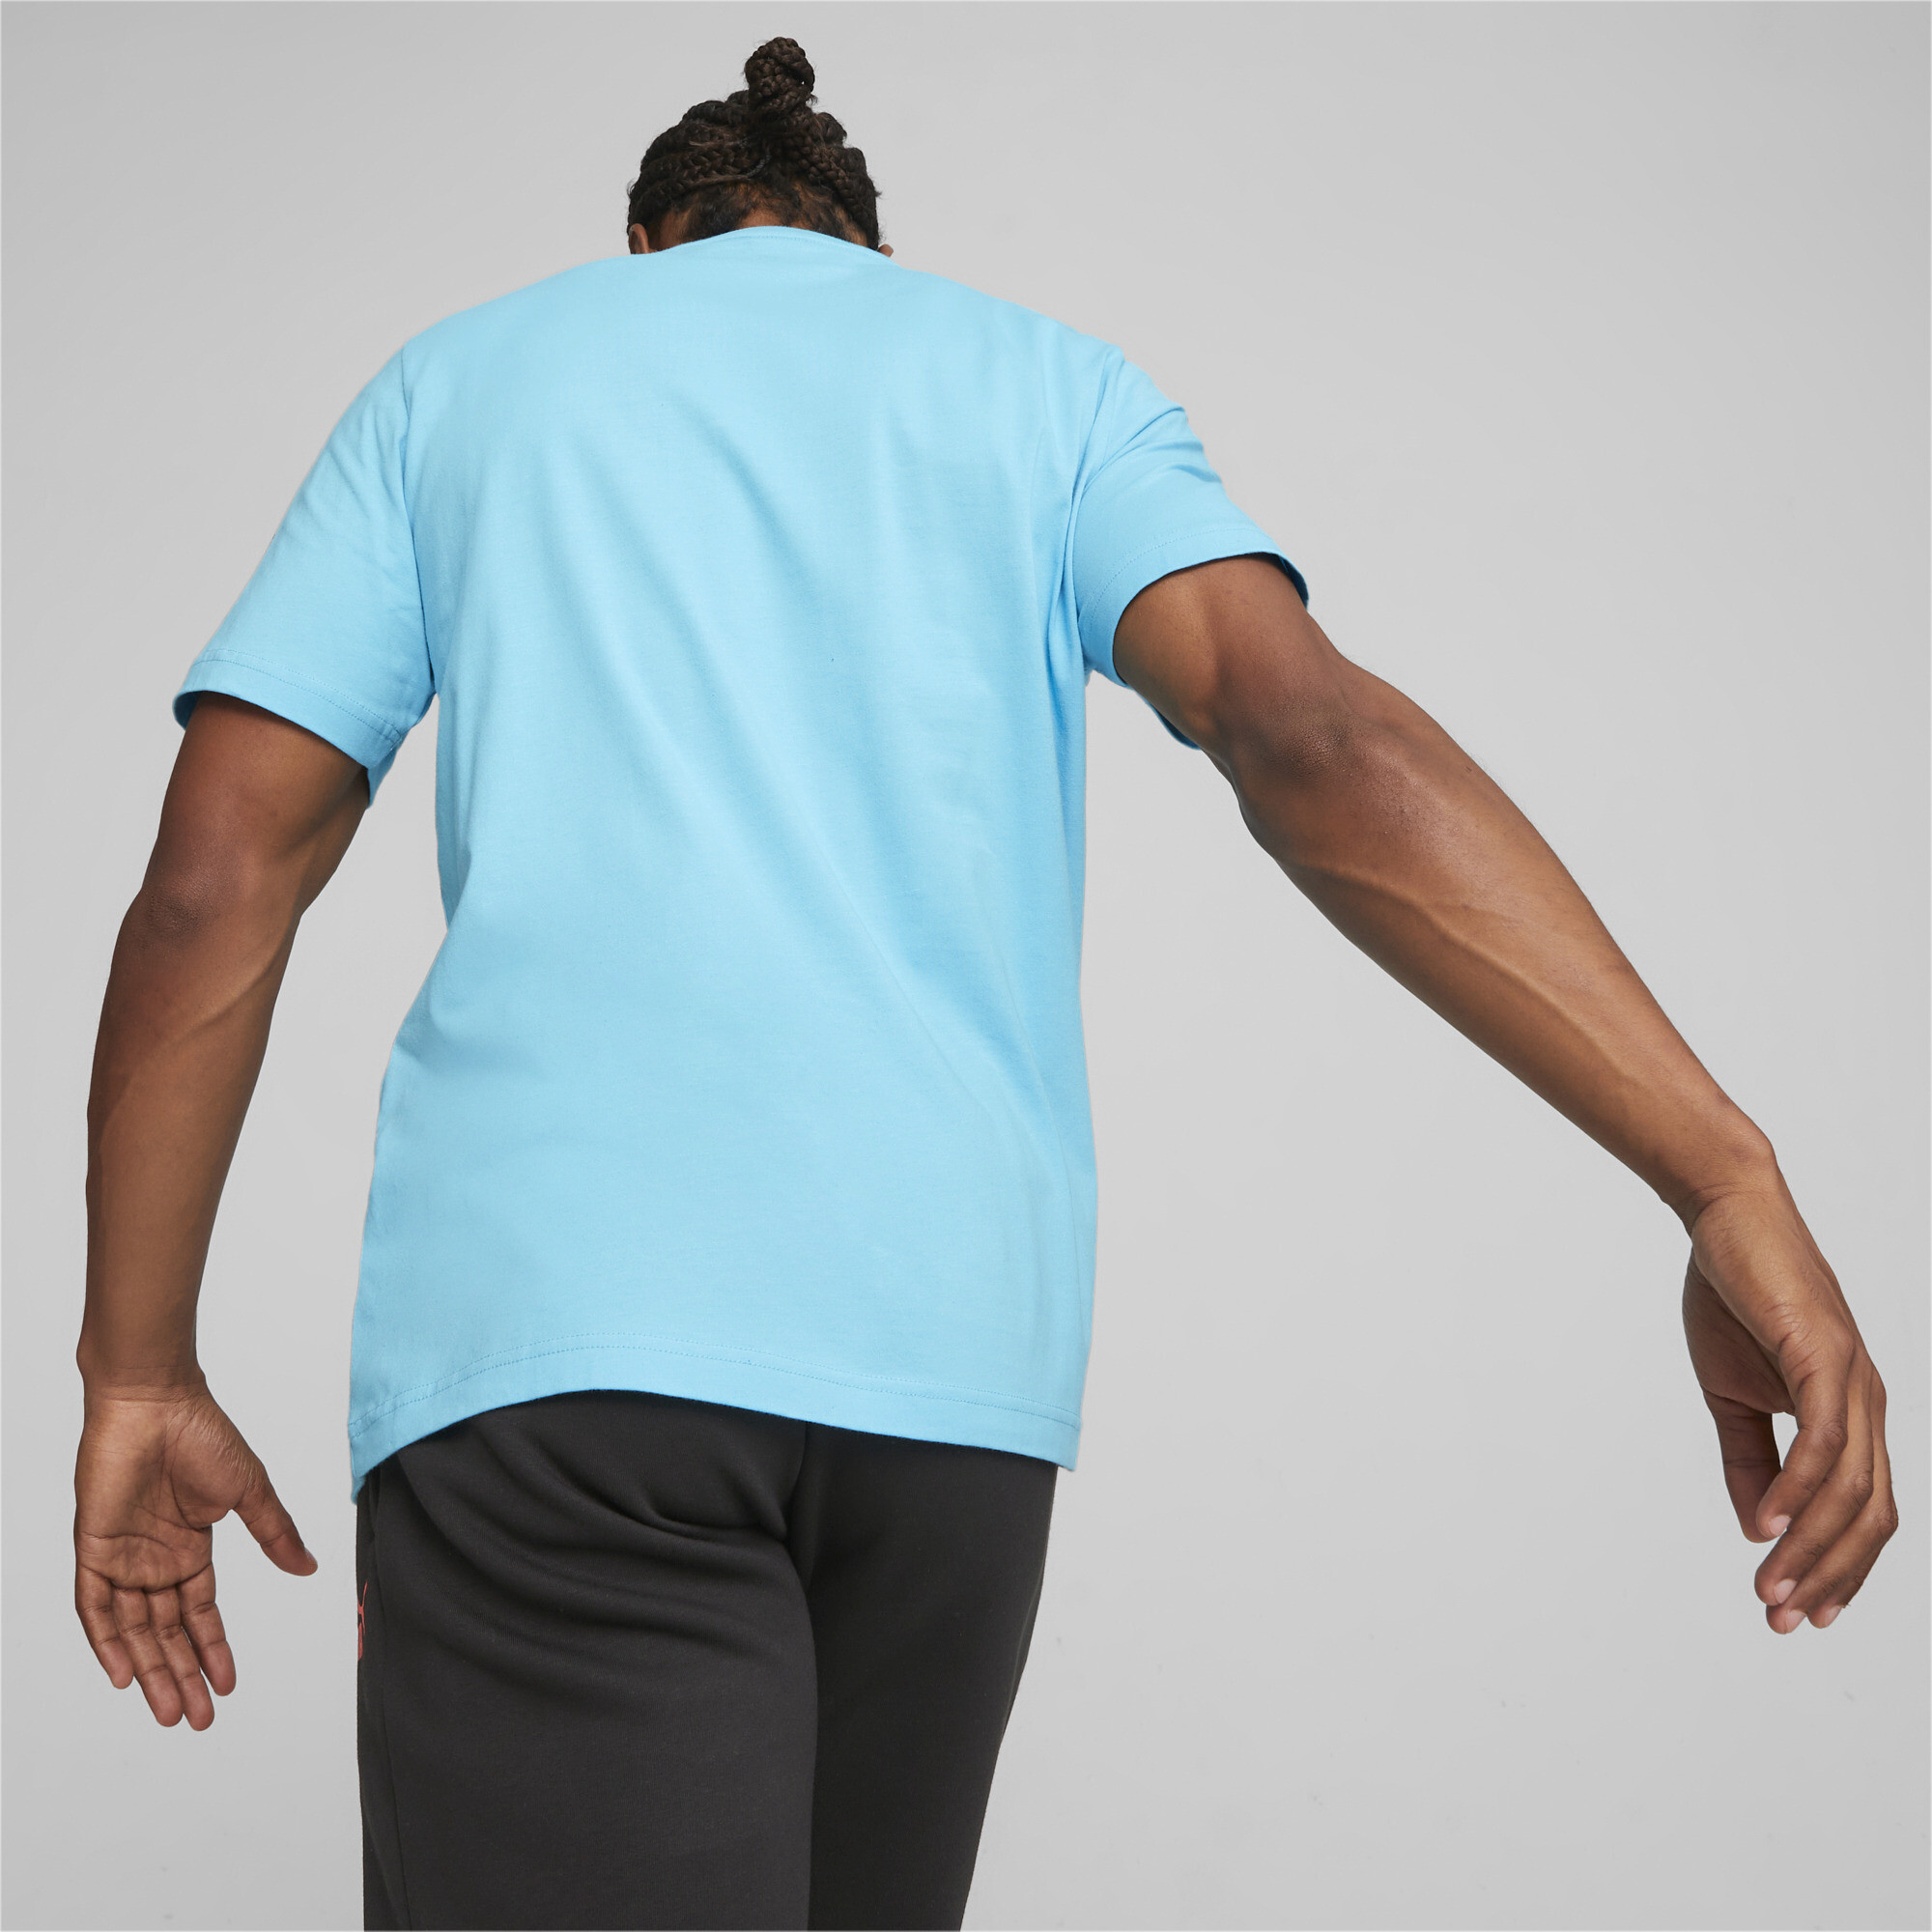 Men's PUMA Manchester City FtblCore Graphic T-Shirt In Blue, Size XS